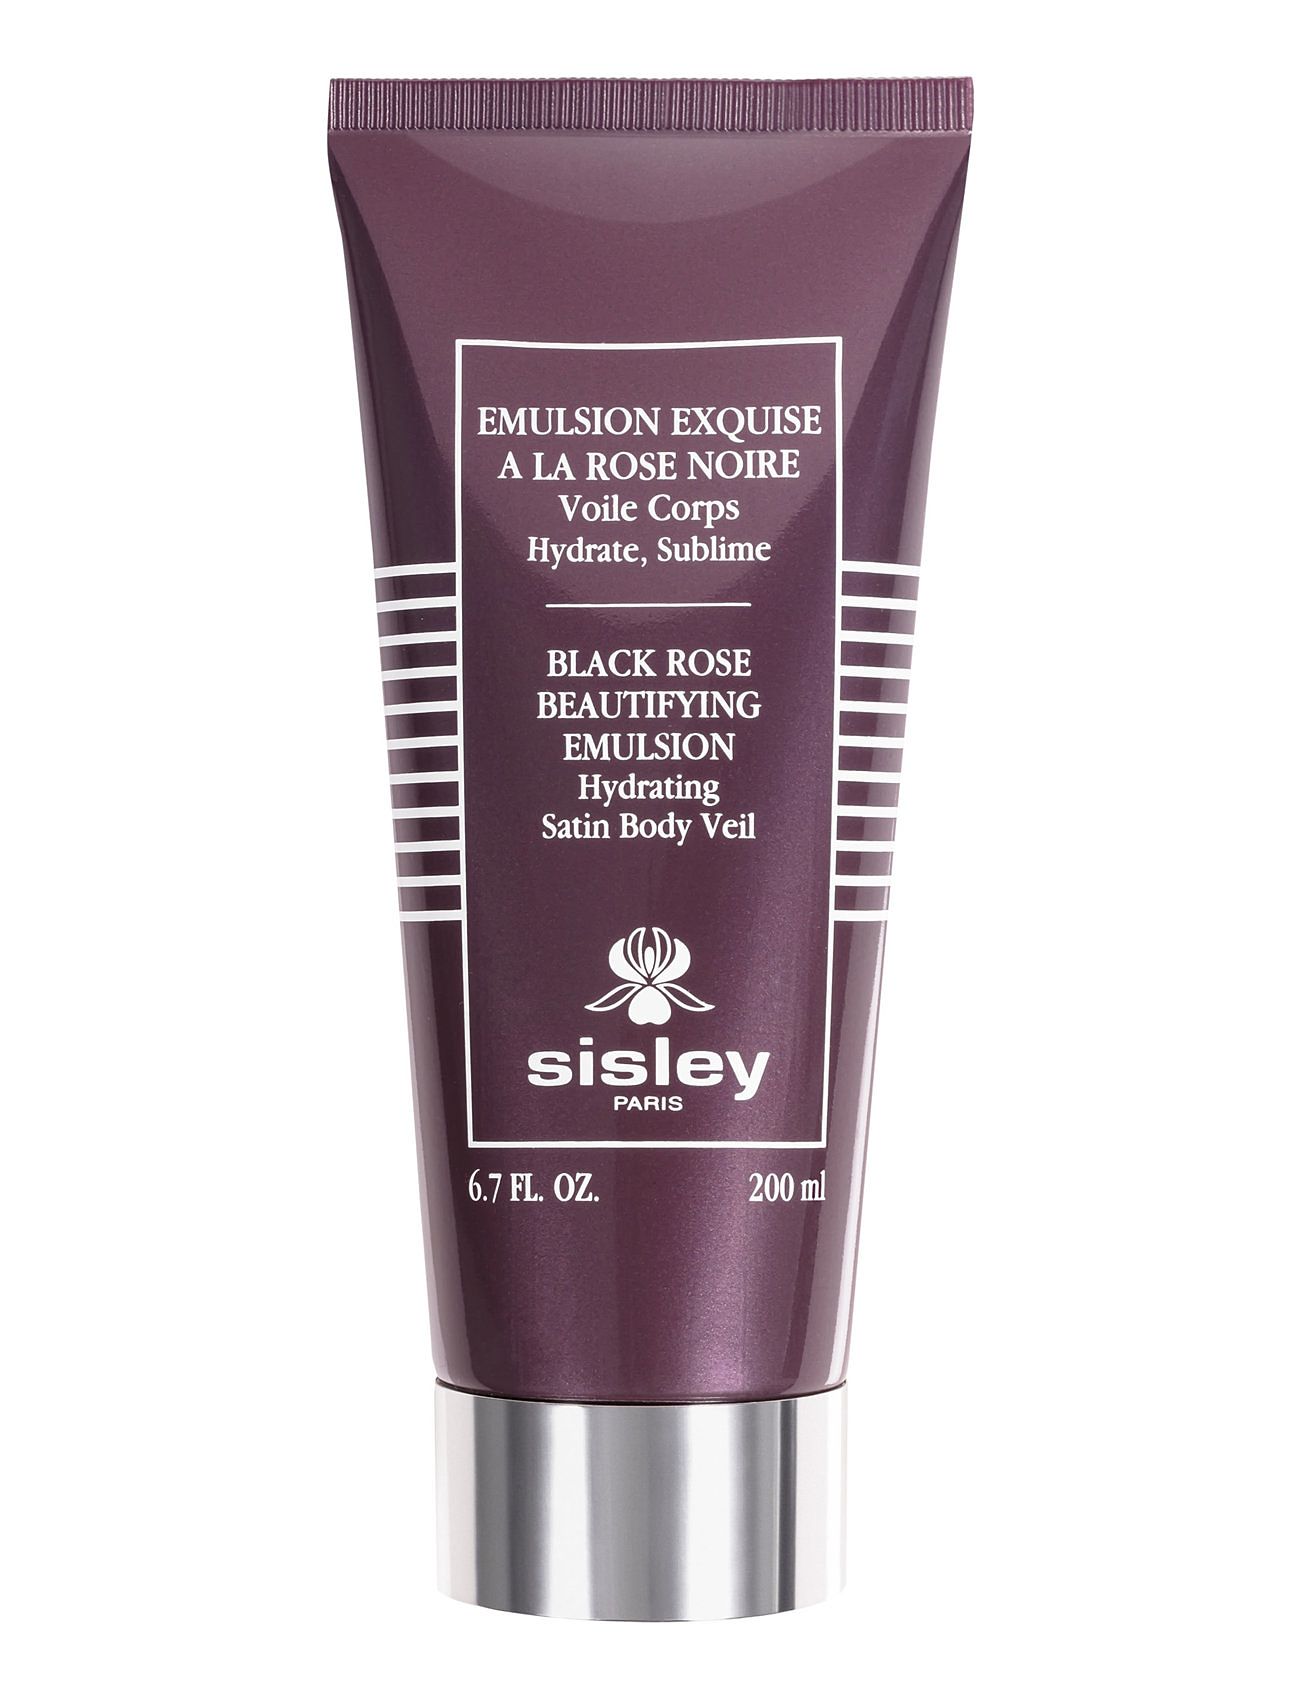 Black Rose Beautifying Emulsion Body Creme Lotion Bodybutter Nude Sisley